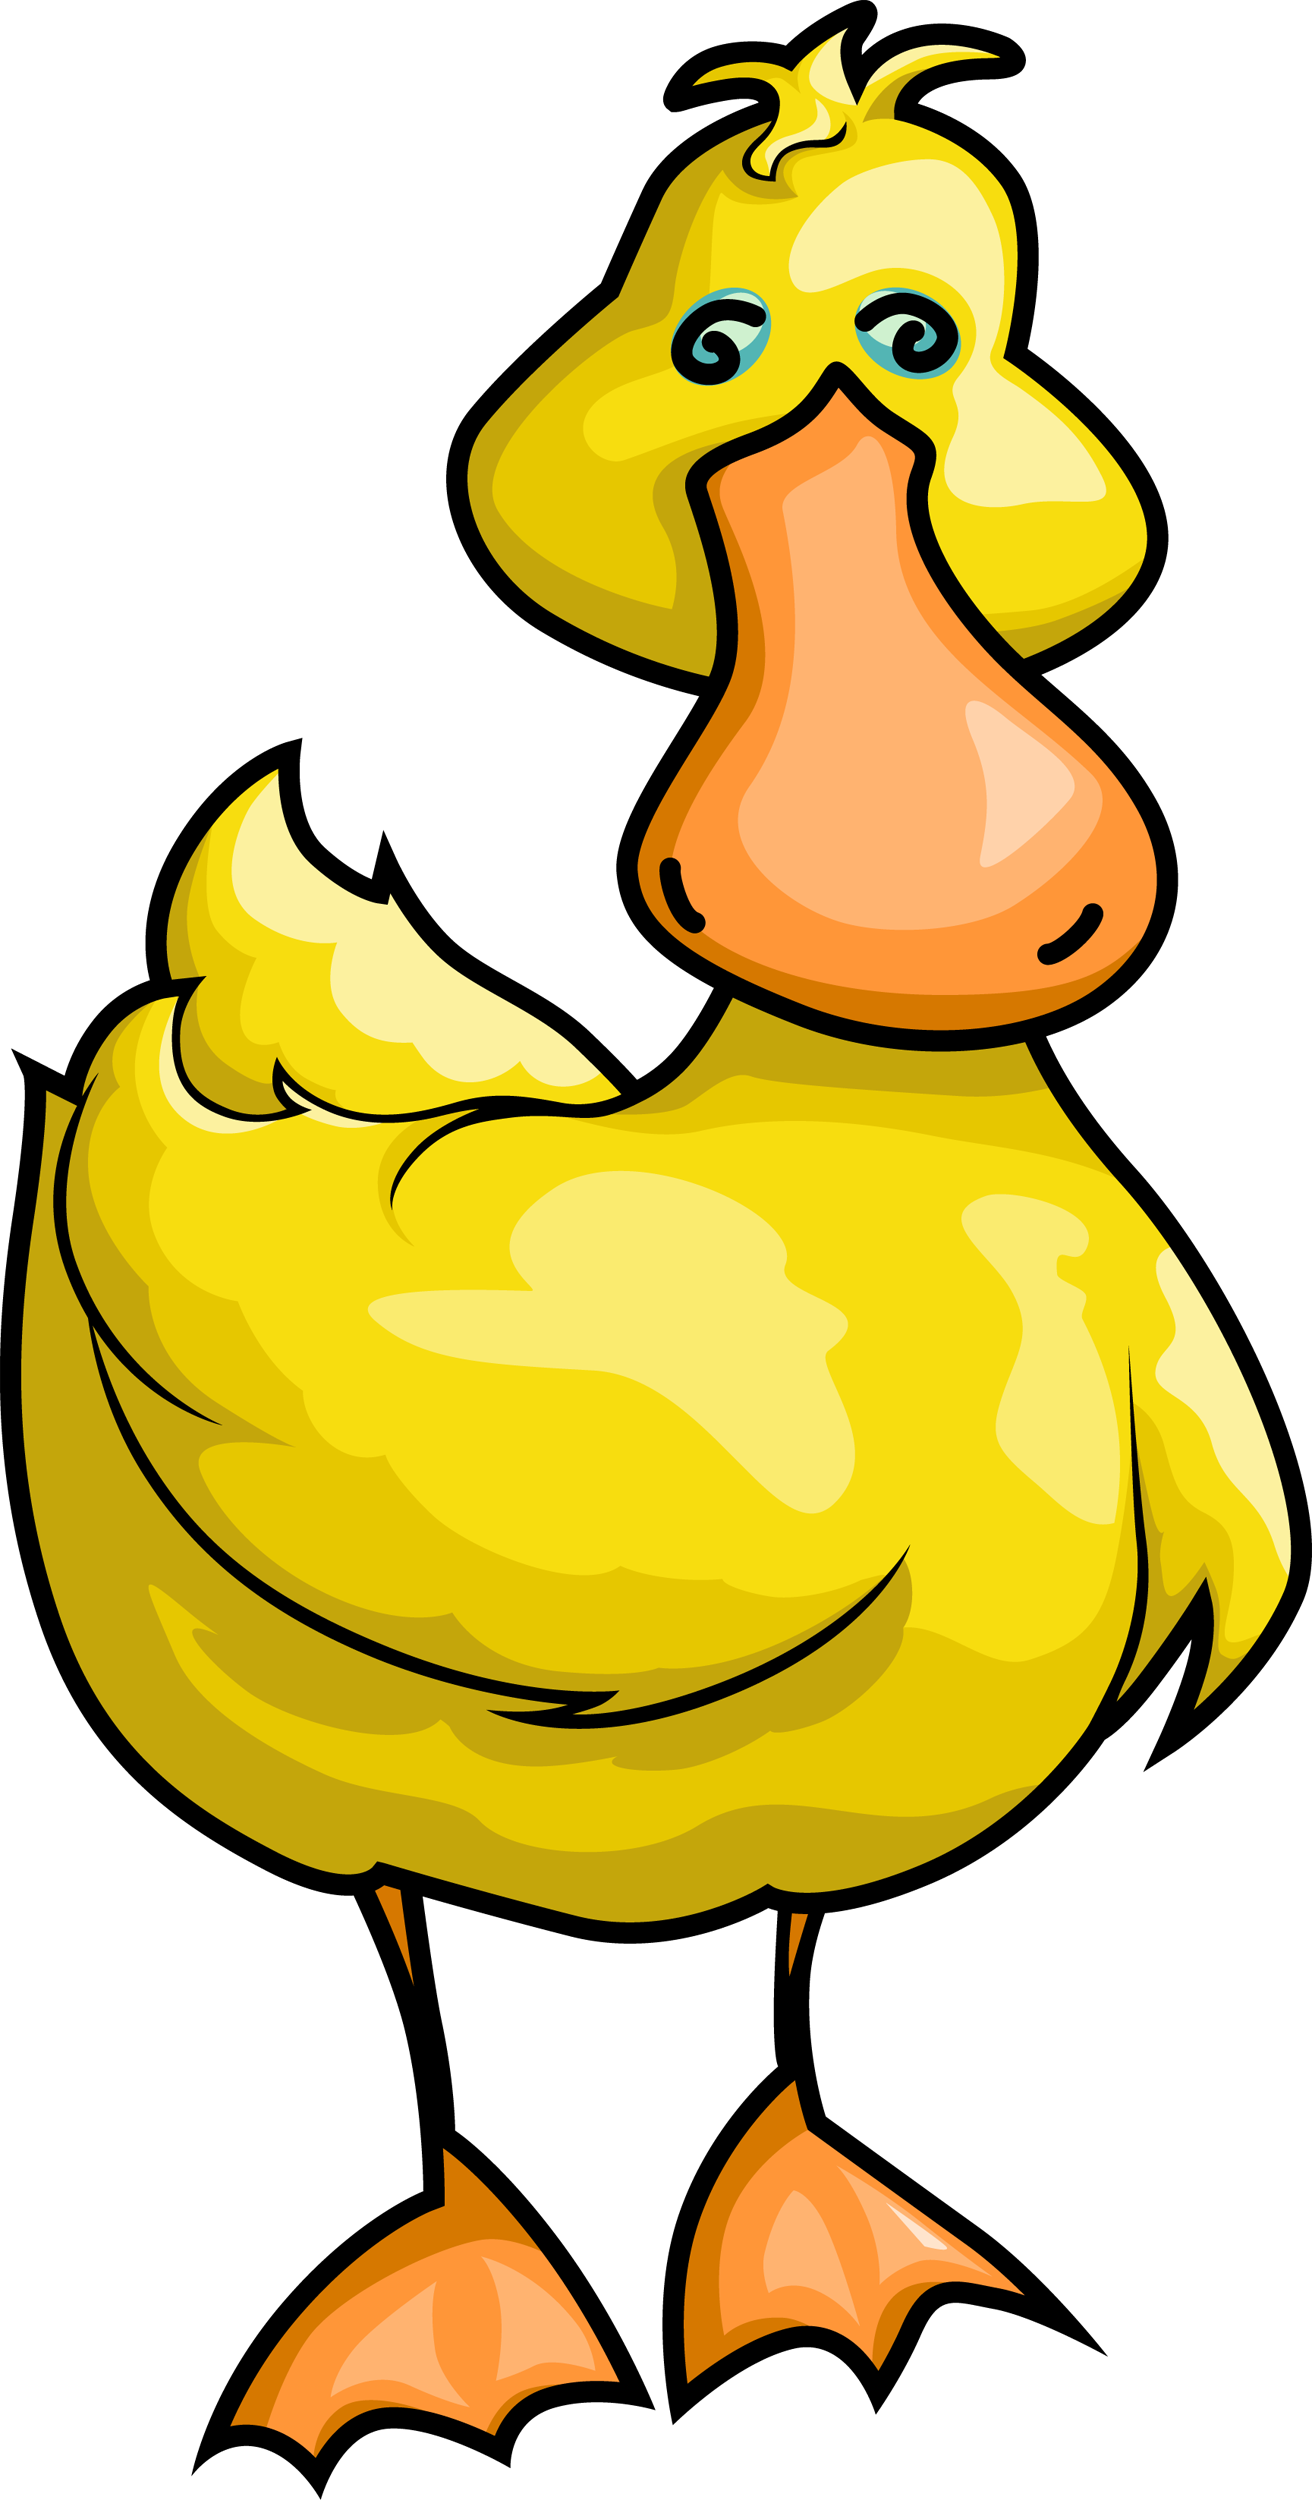 Rubber Duck (1312x2500)